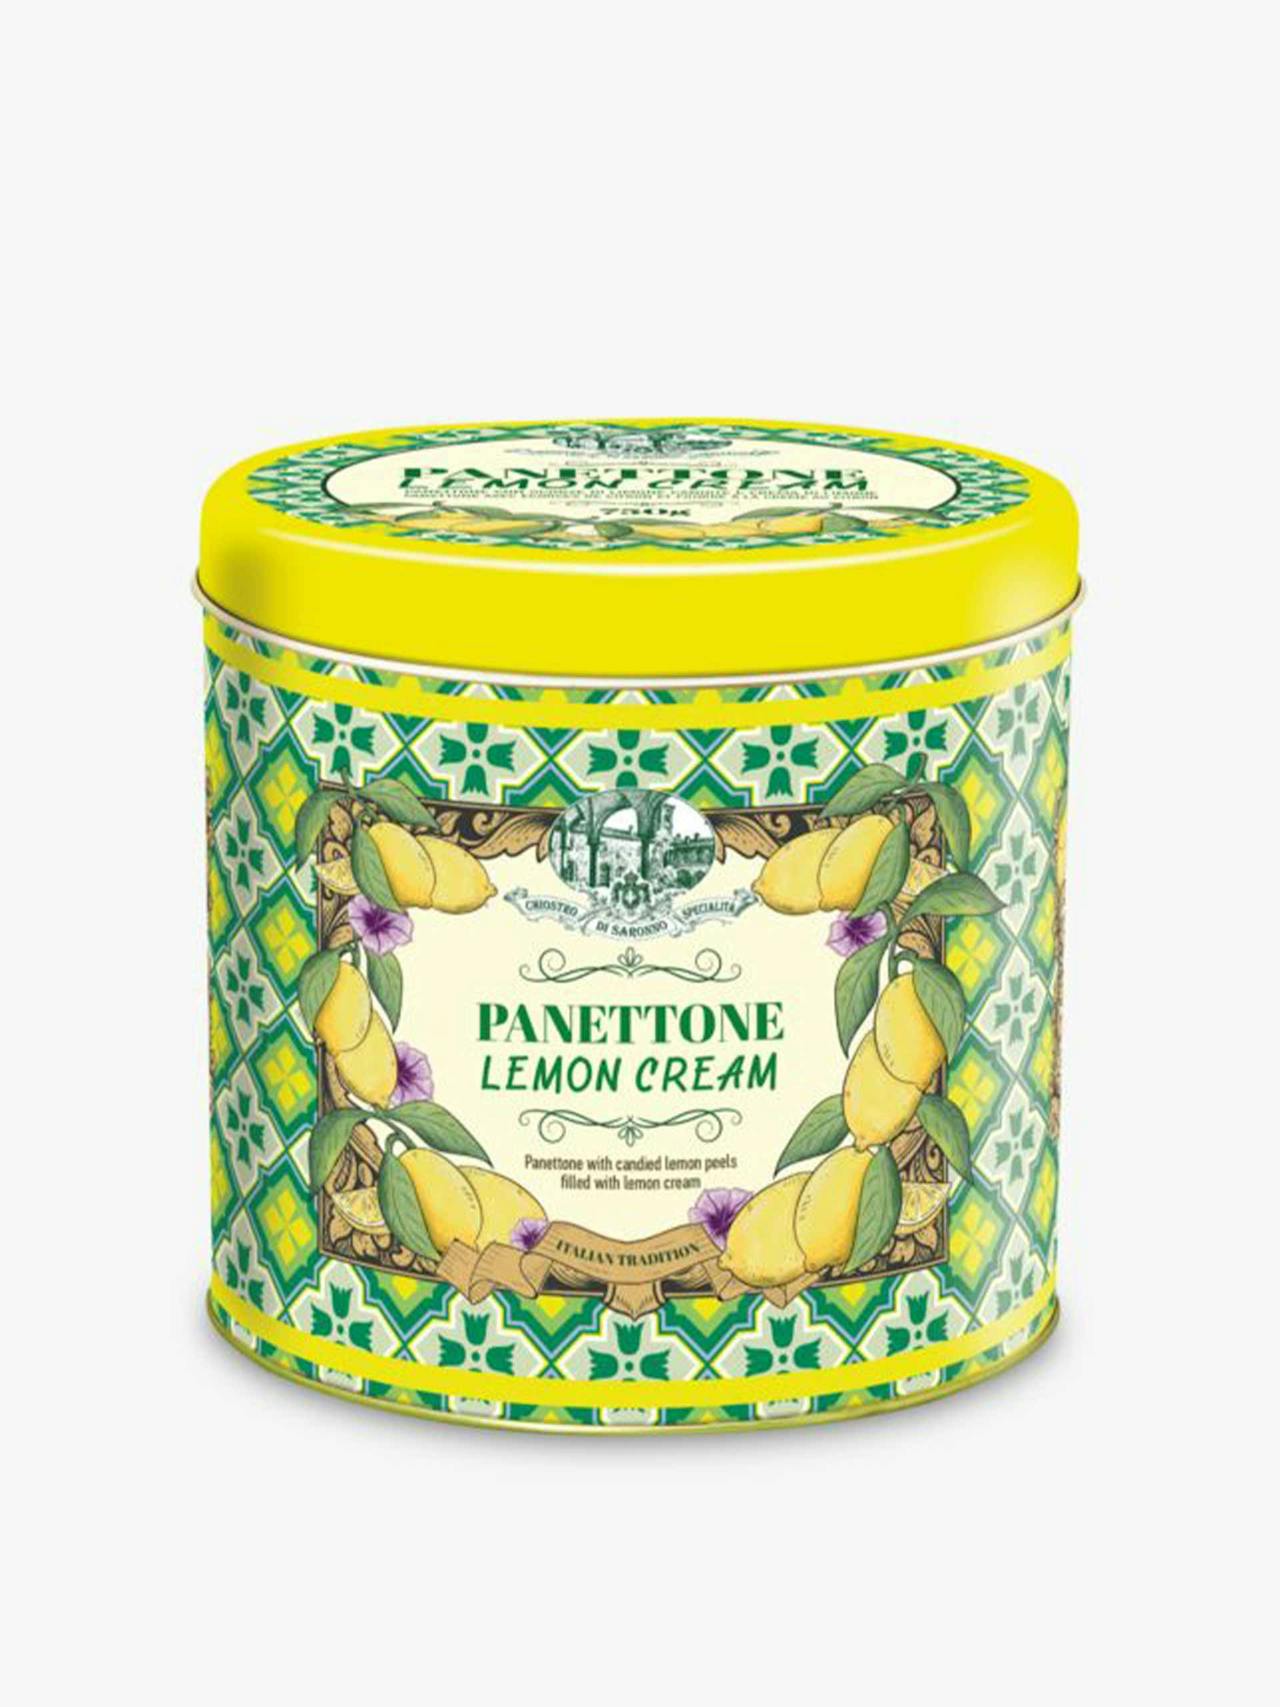 Lemon cream panettone